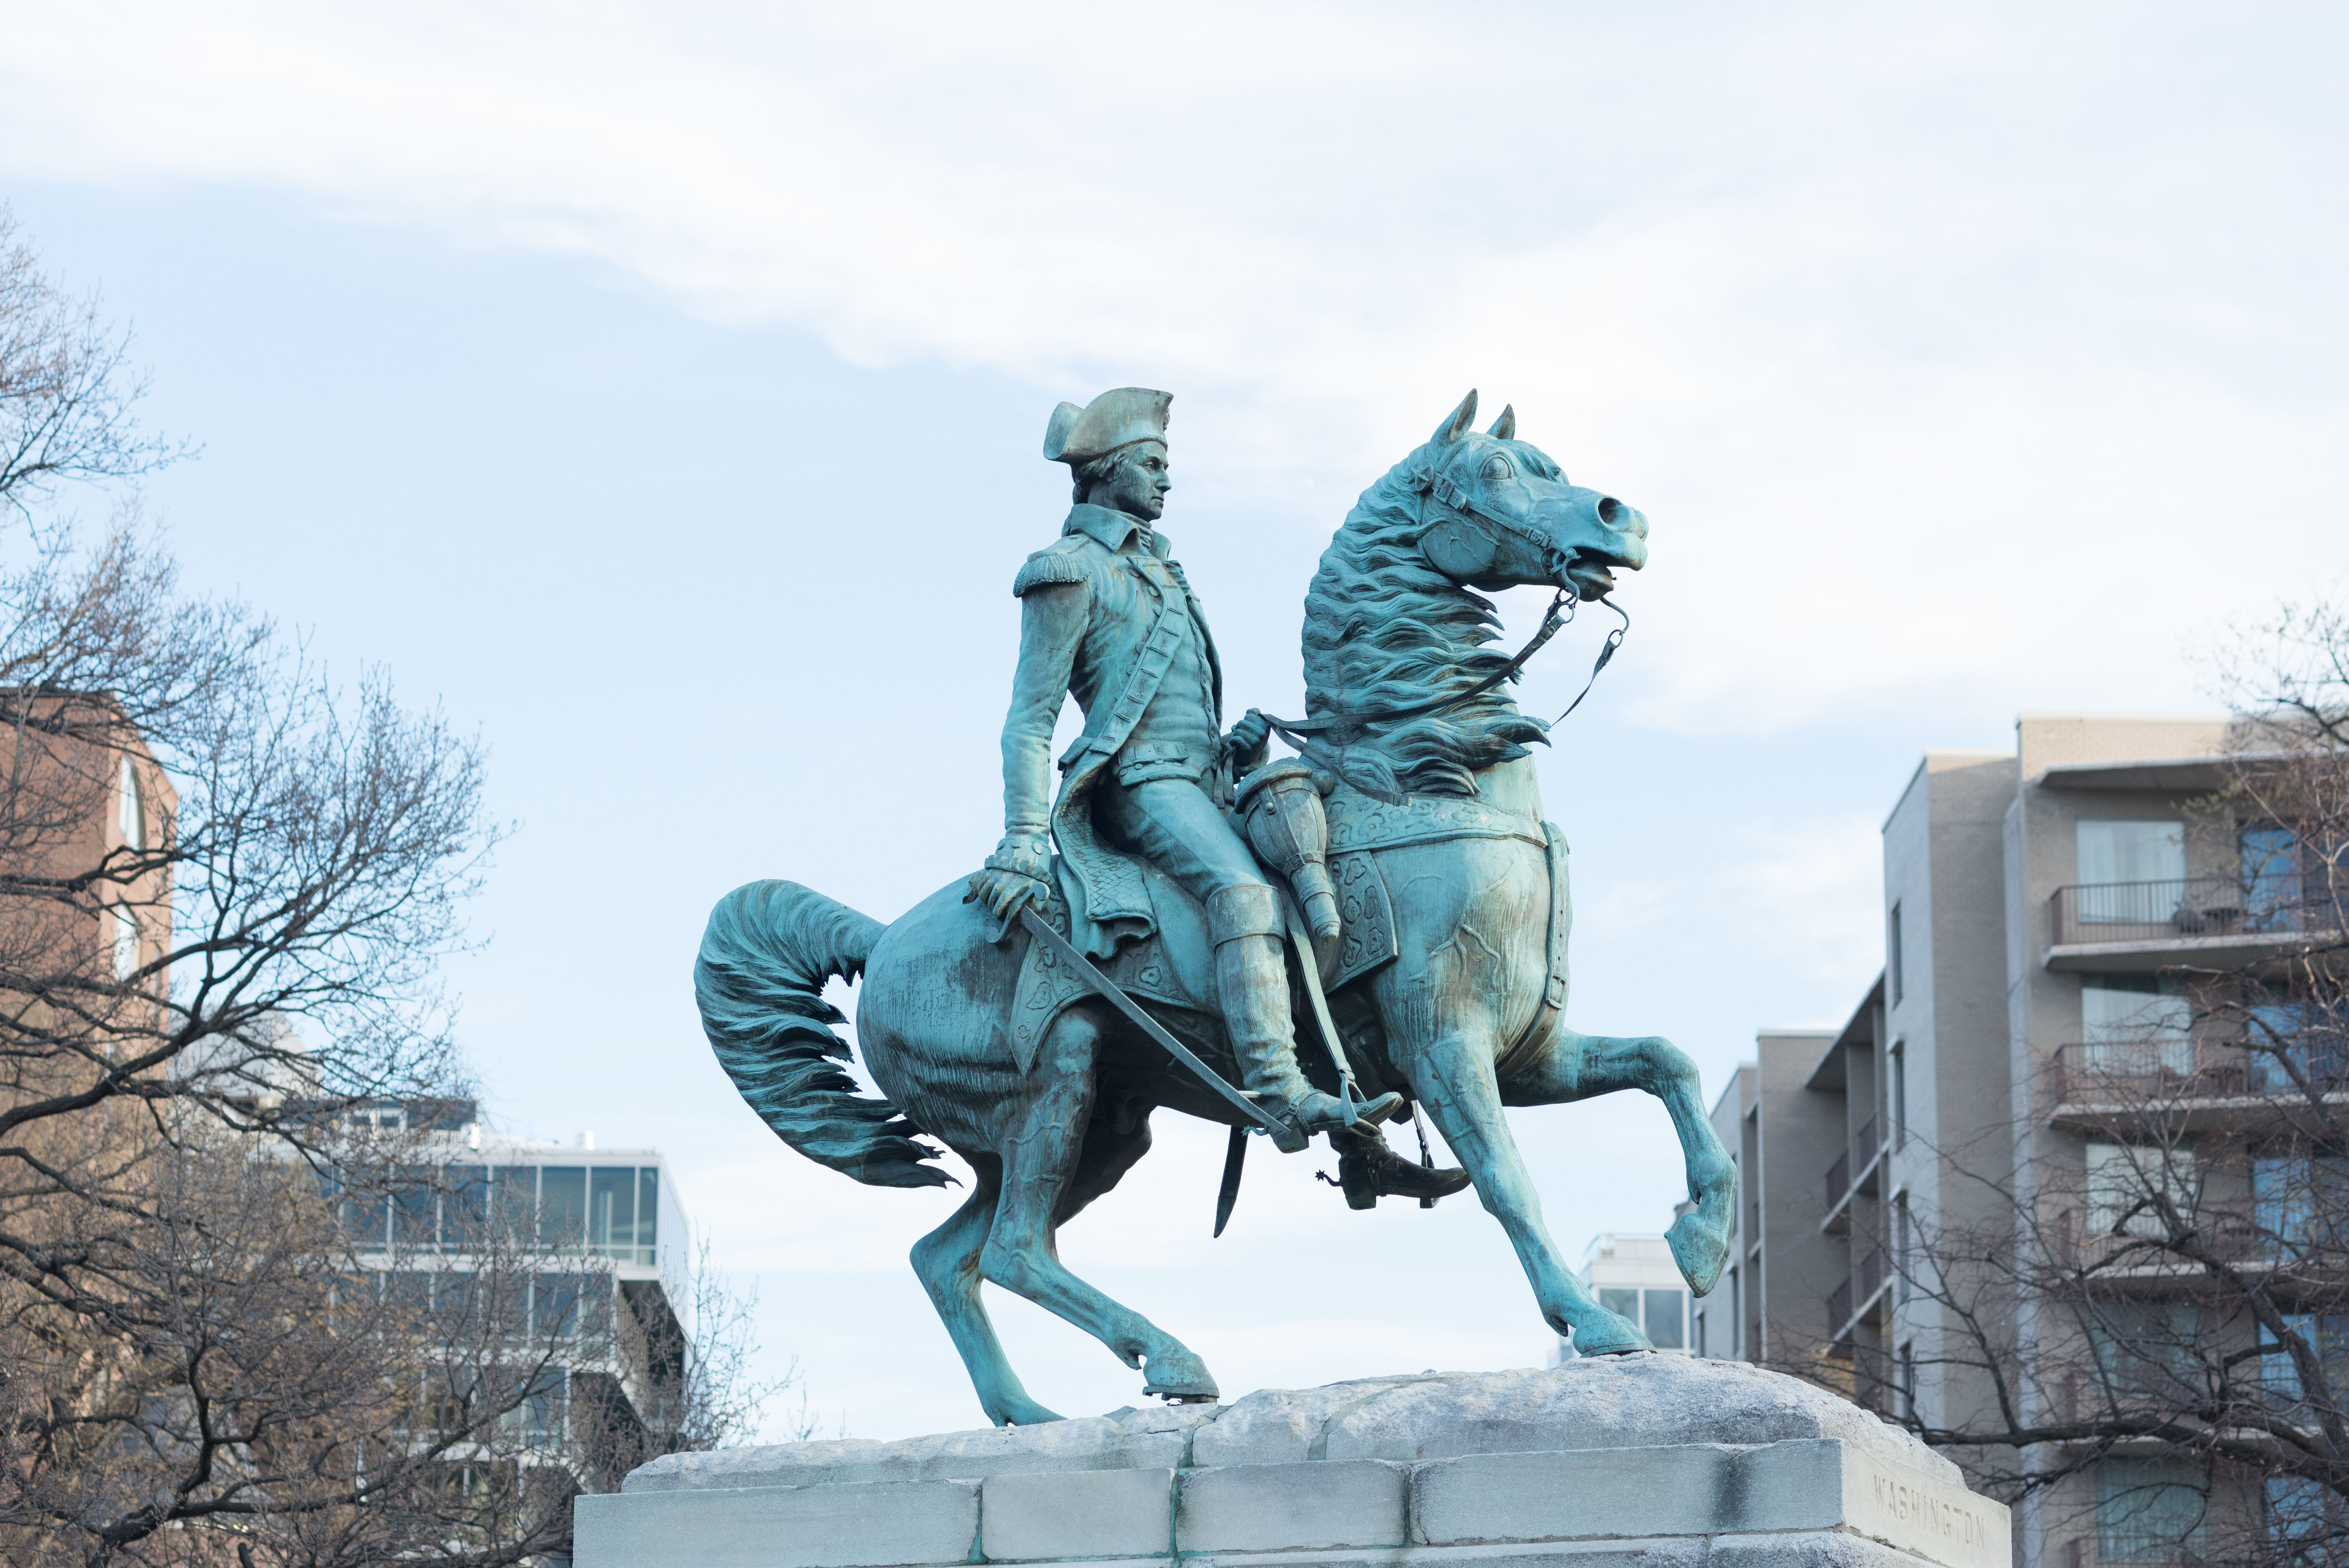 A statue of George Washington at George Washington University in Washington DC, as photographed by Canadian travel blogger Cee Fardoe of Coco & Vera